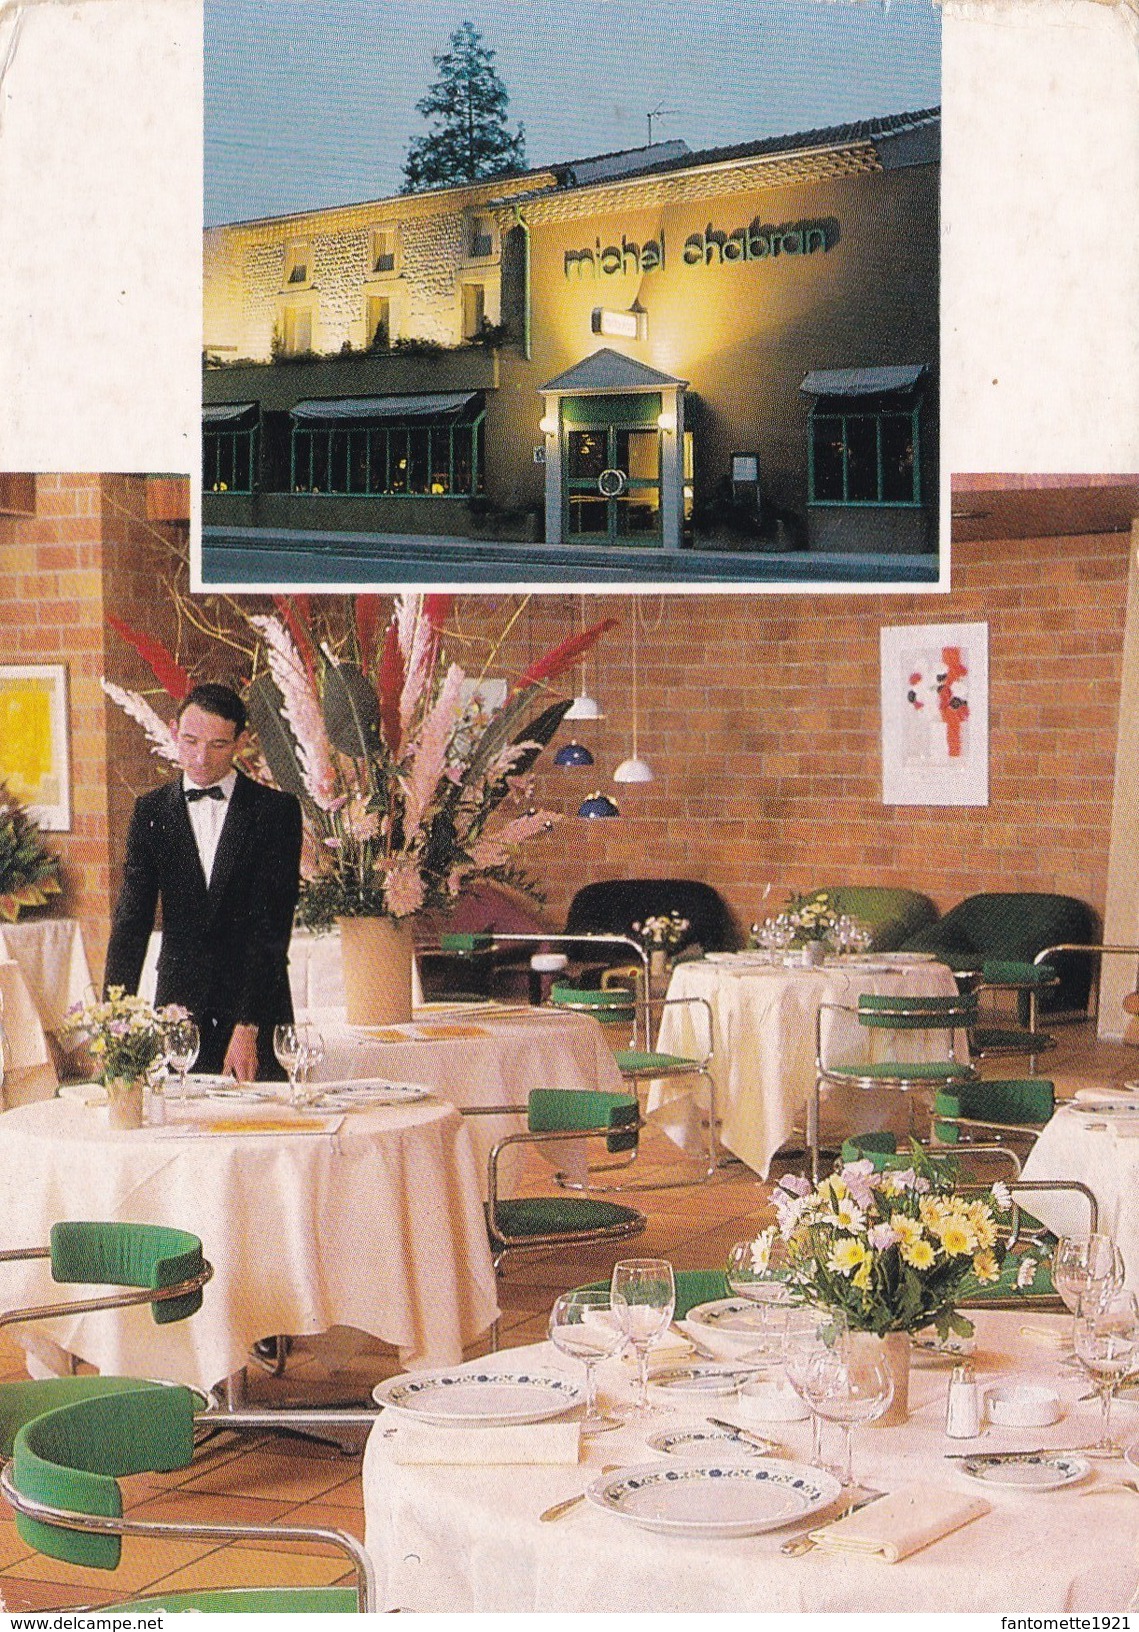 RESTAURANT MICHEL CHABRAN (dil284) - Hotels & Restaurants